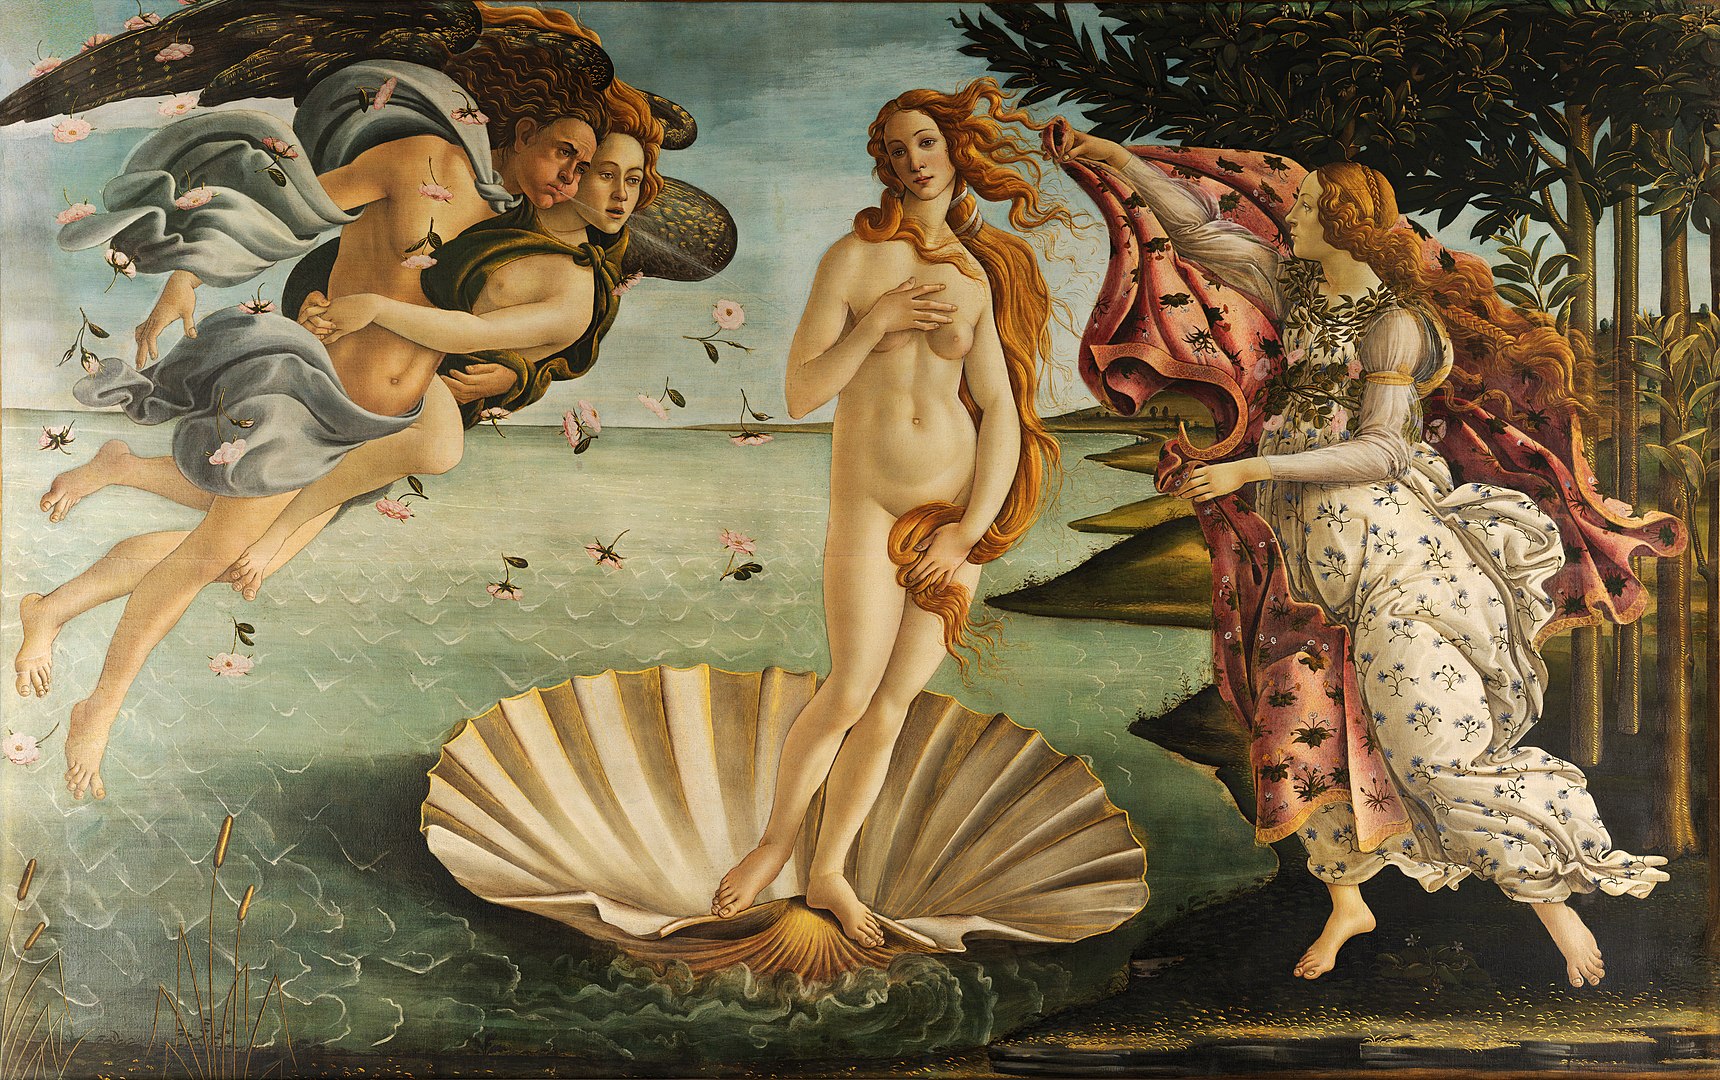 Die Geburt der Venus by Sandro Botticelli - ca. 1484–1486 - 172,5 × 278,5 cm Galleria degli Uffizi (Die Uffizien)